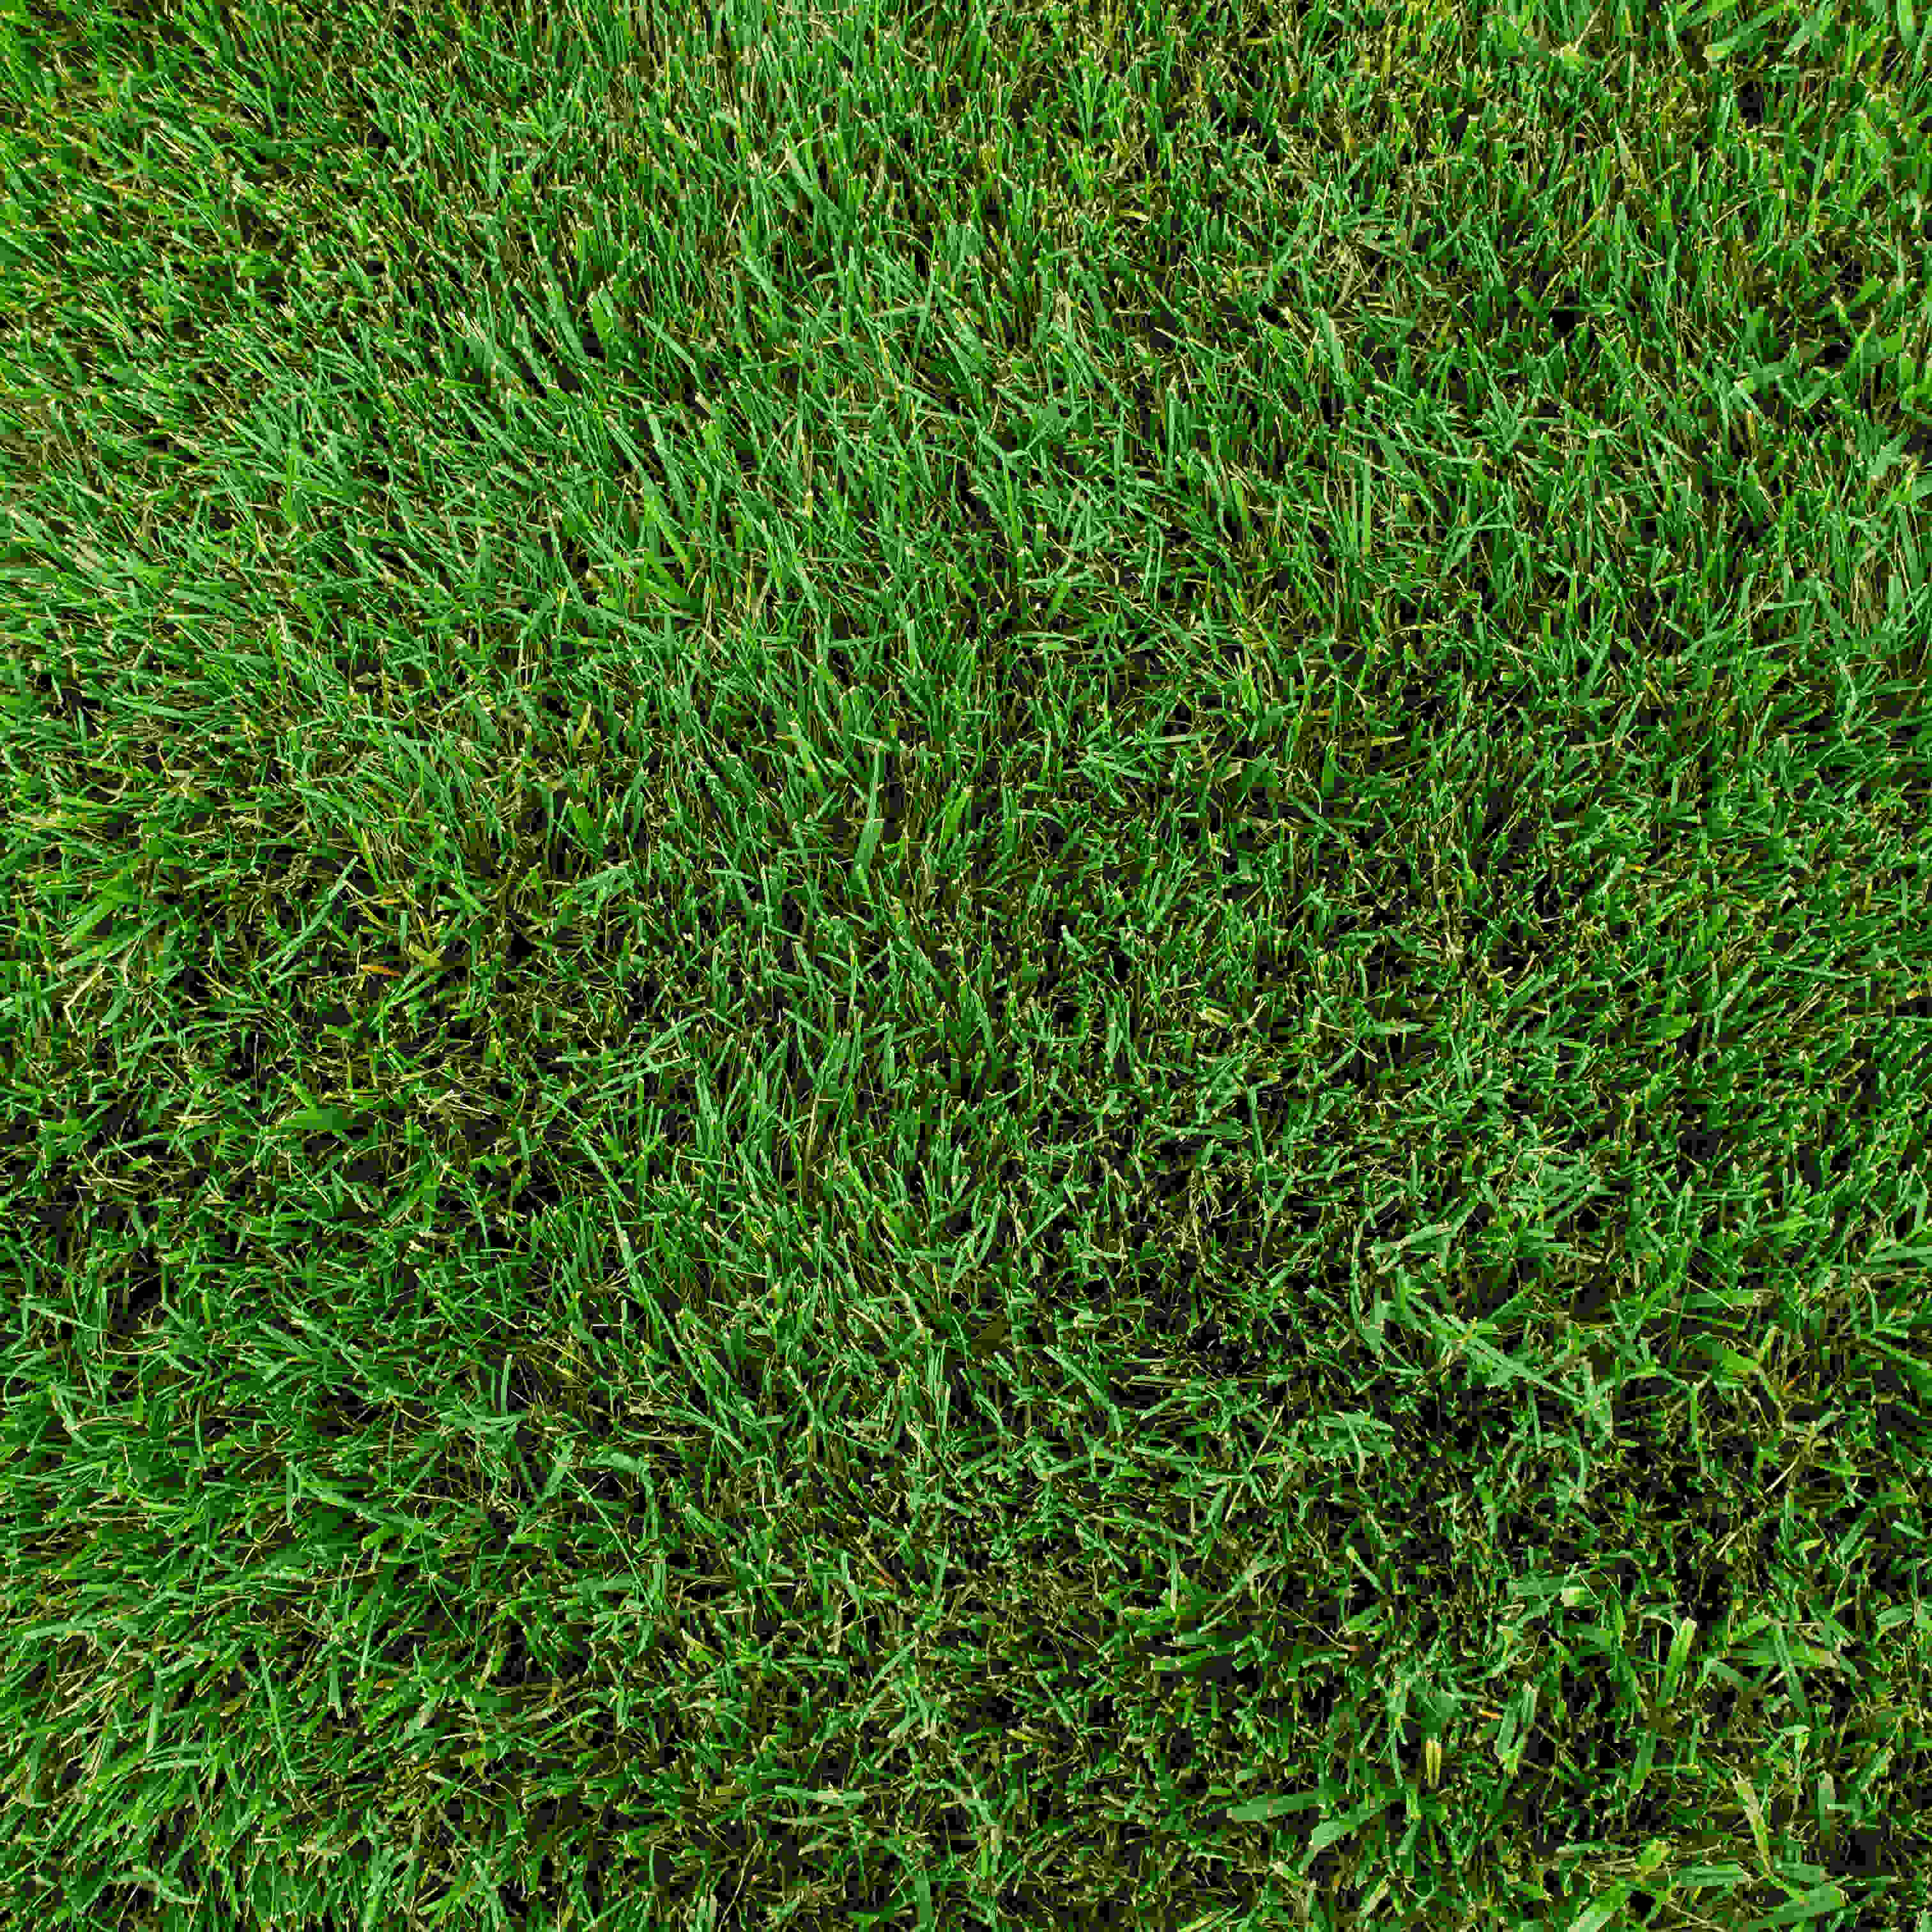 Turf grass